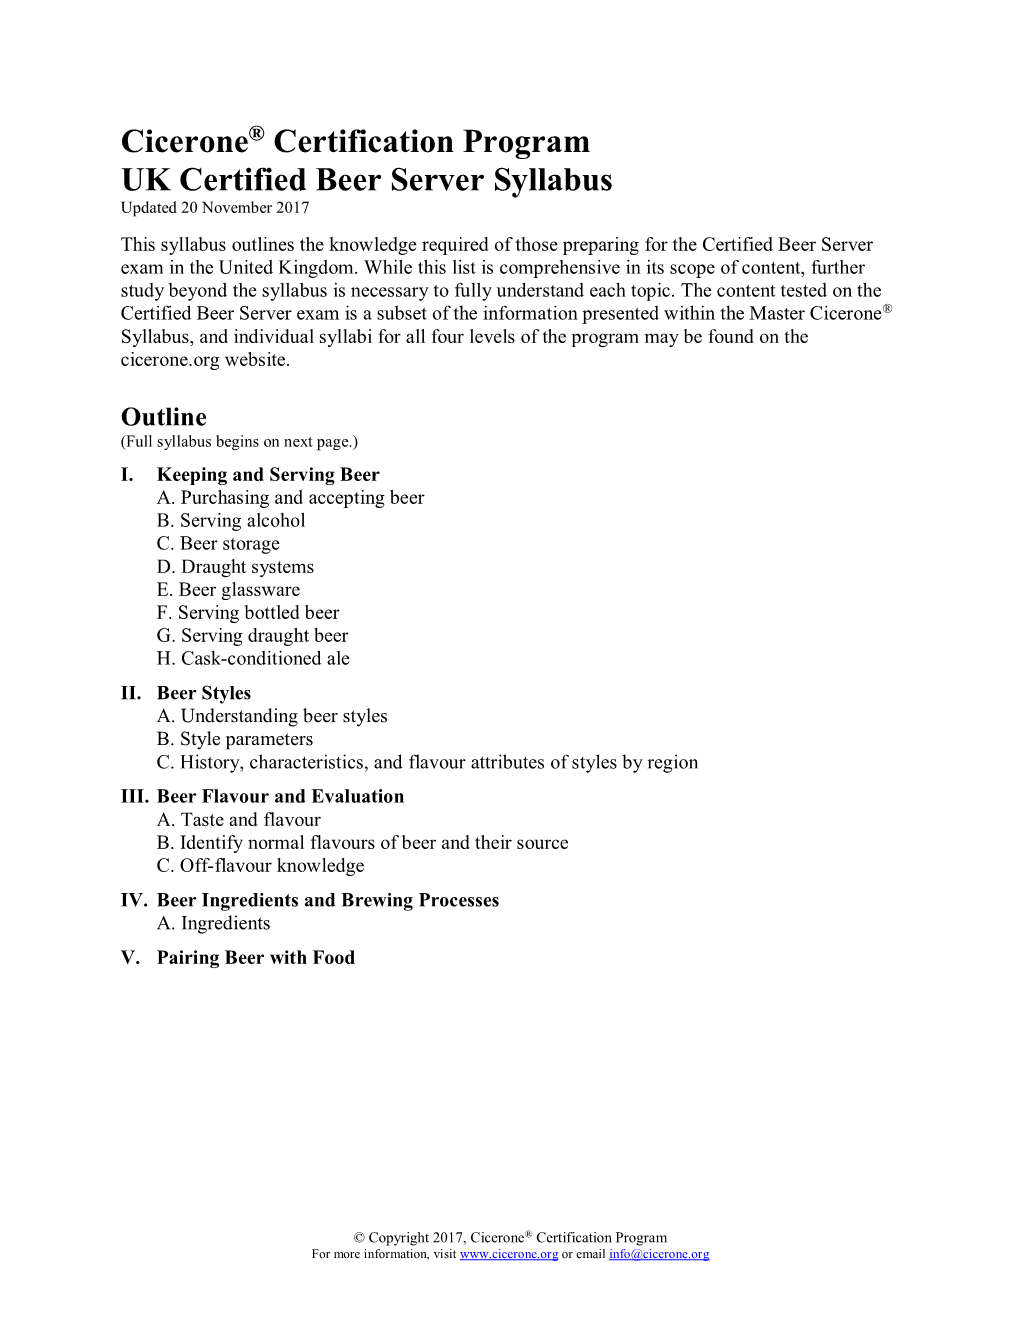 Cicerone® Certification Program UK Certified Beer Server Syllabus Updated 20 November 2017